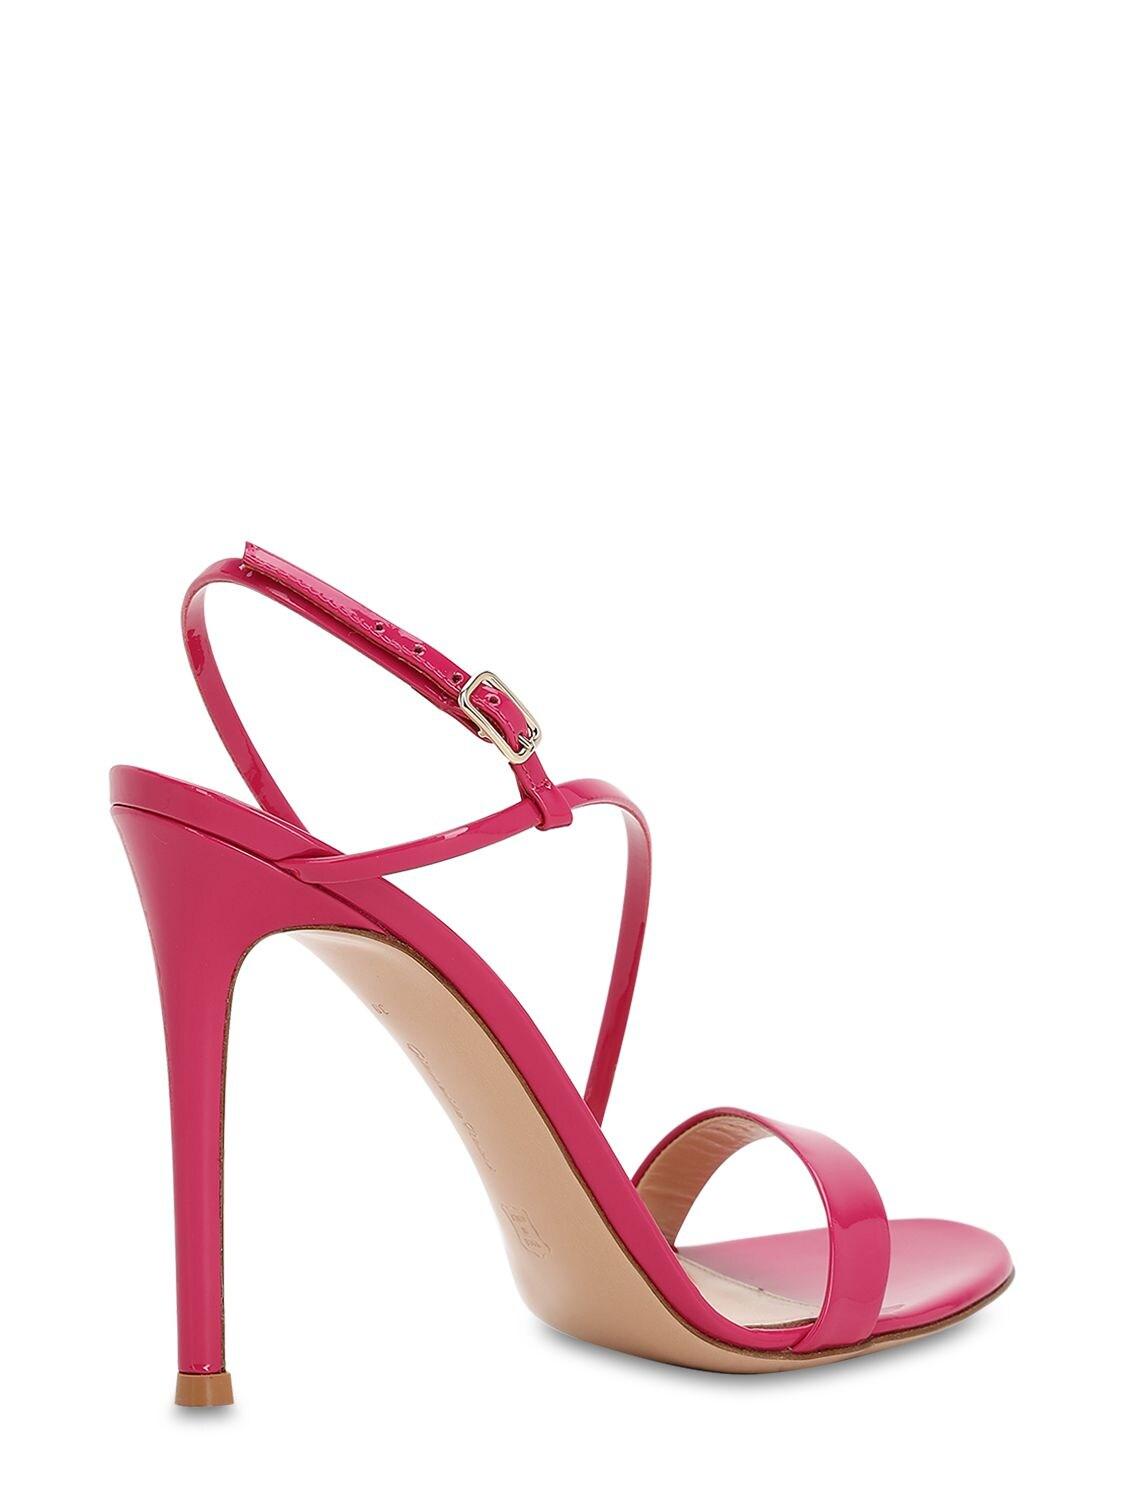 Gianvito Rossi 105mm Manhattan Patent Leather Sandals in Fuchsia (Pink ...